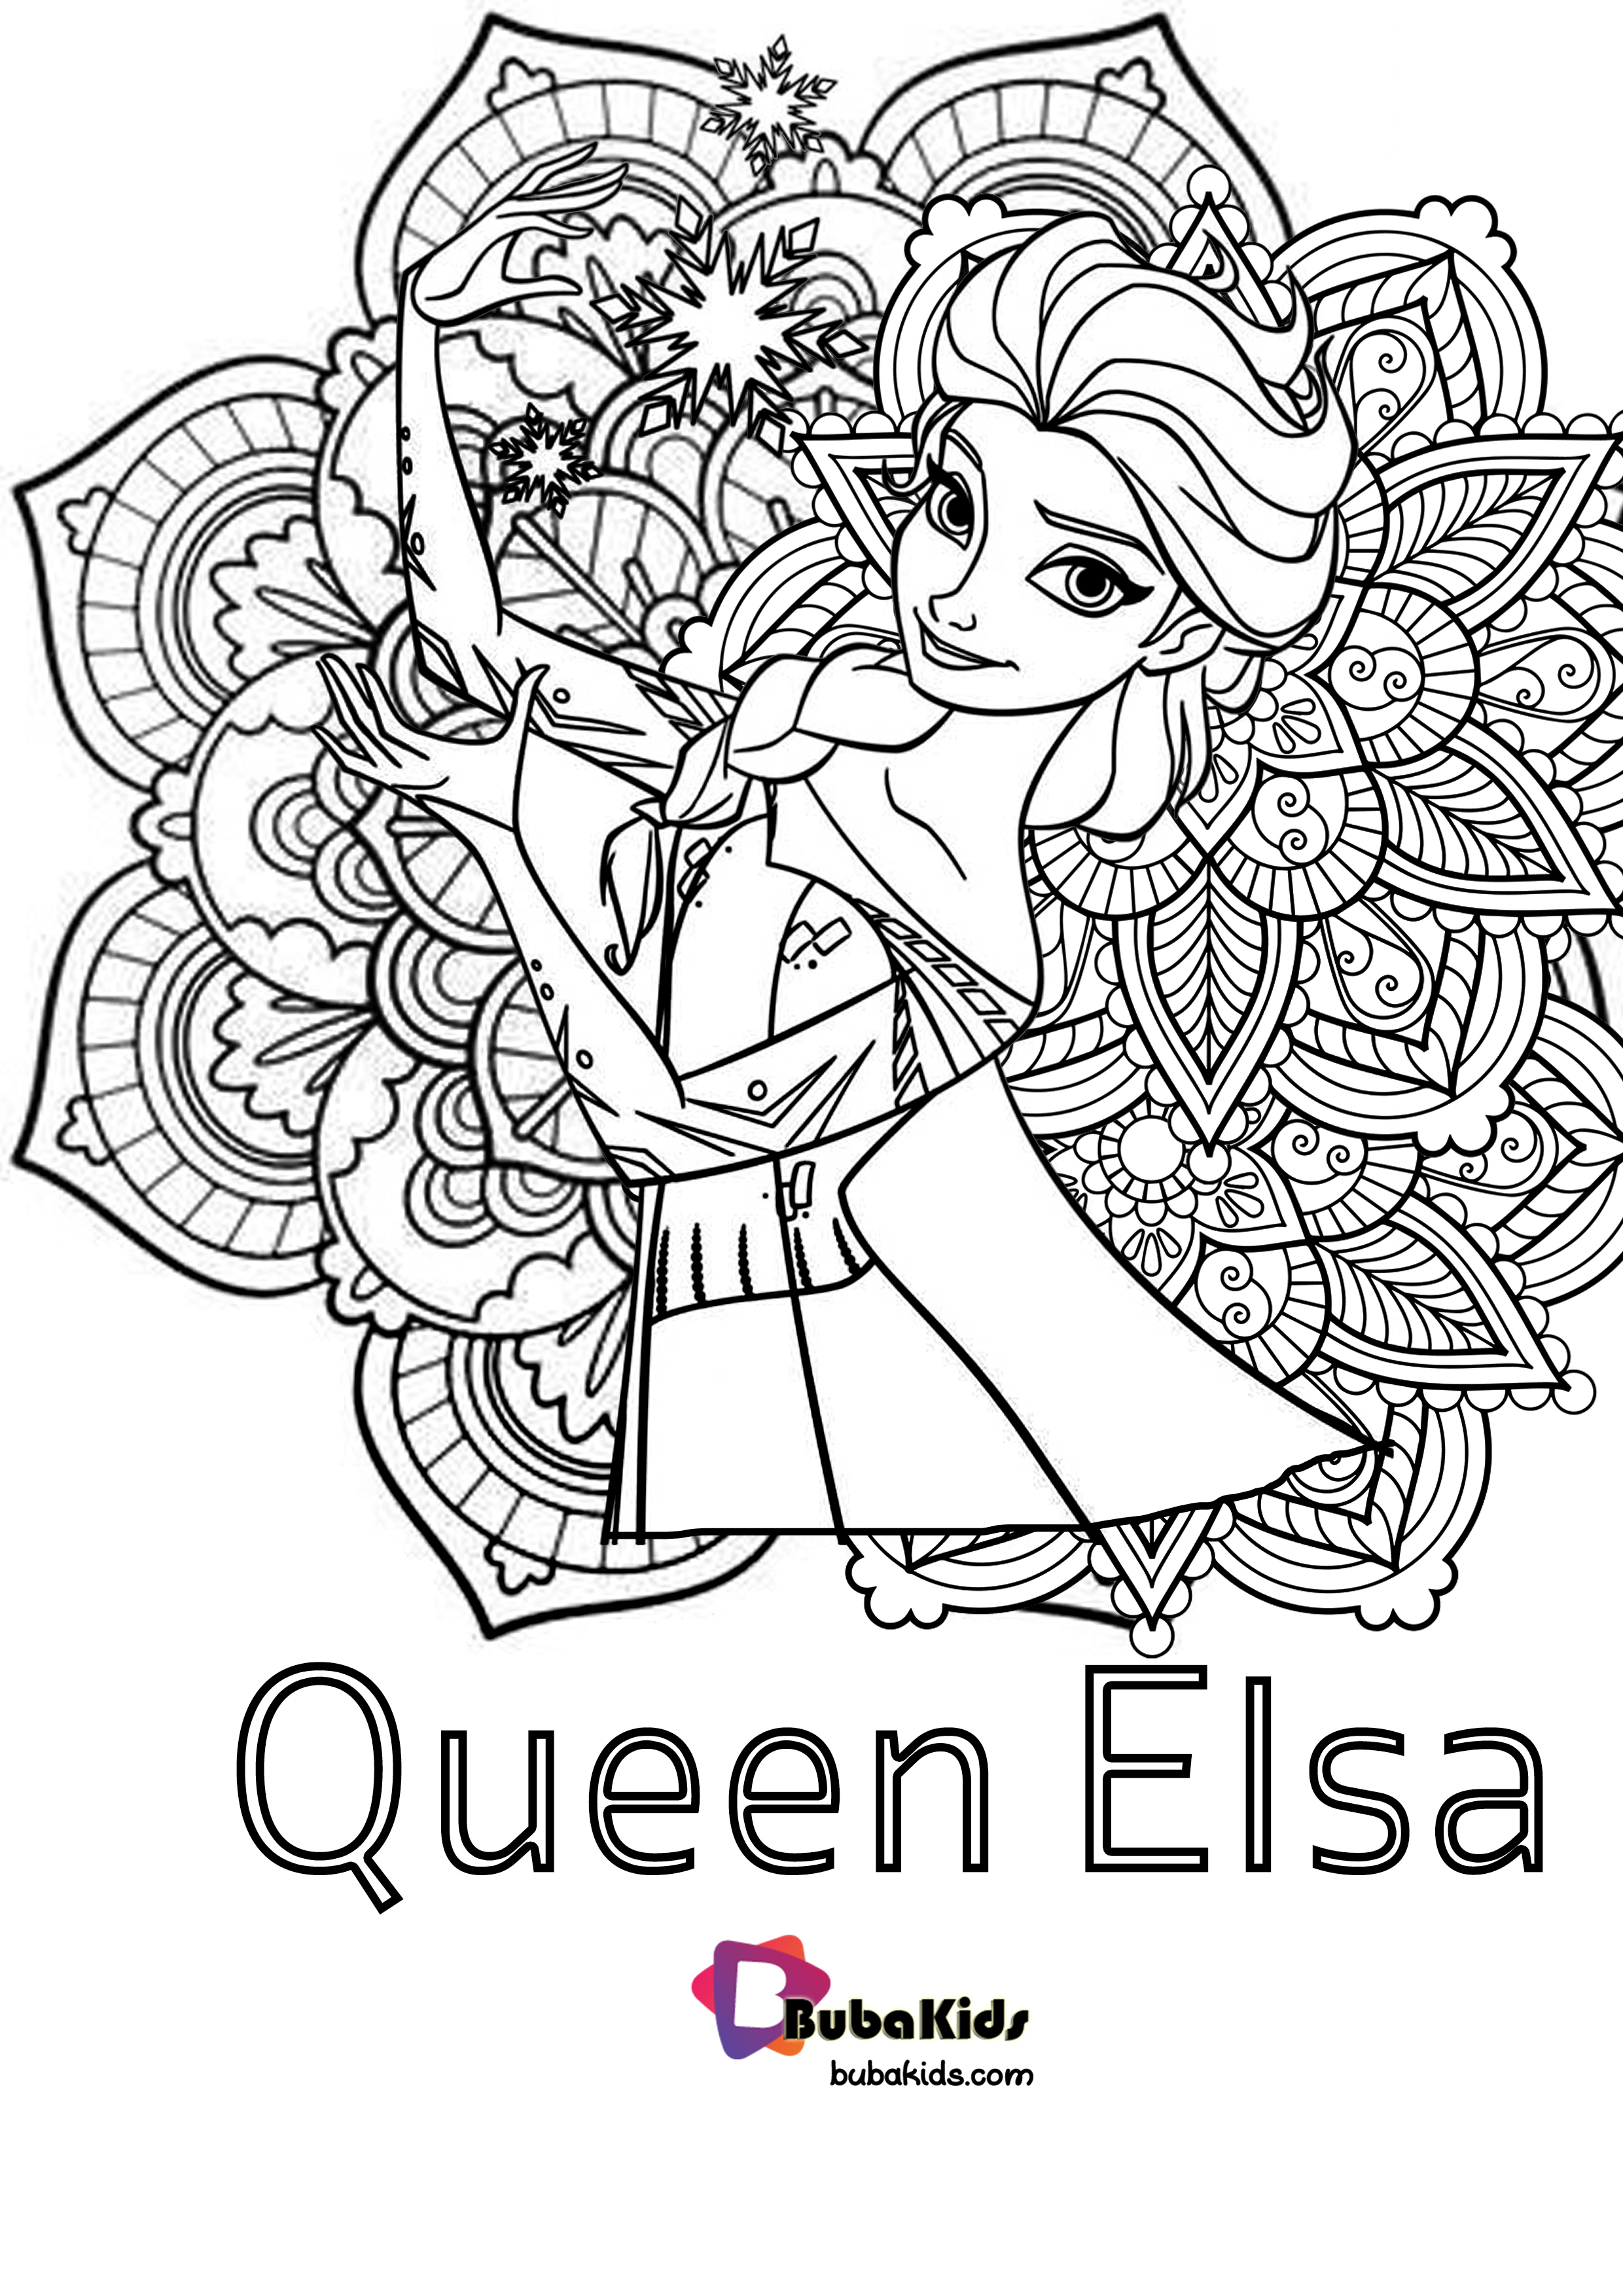 Queen Elsa FLoral Coloring Pages Wallpaper